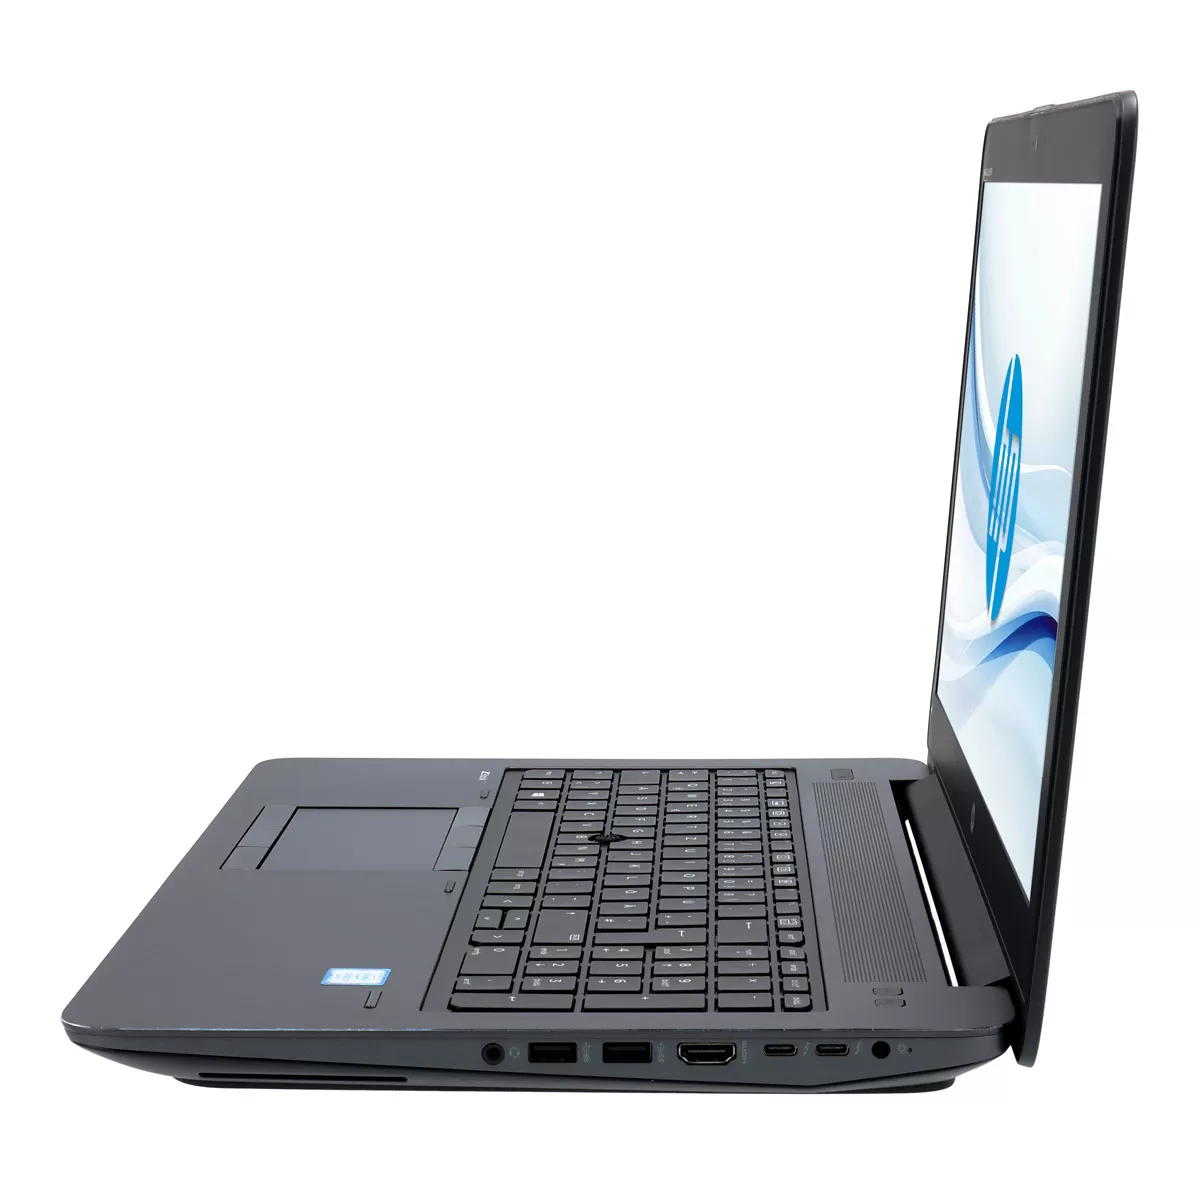 HP ZBook 15 G3 Core i7 6700HQ nVidia Quadro M2000M 16 GB 240 GB M.2 SSD Webcam B